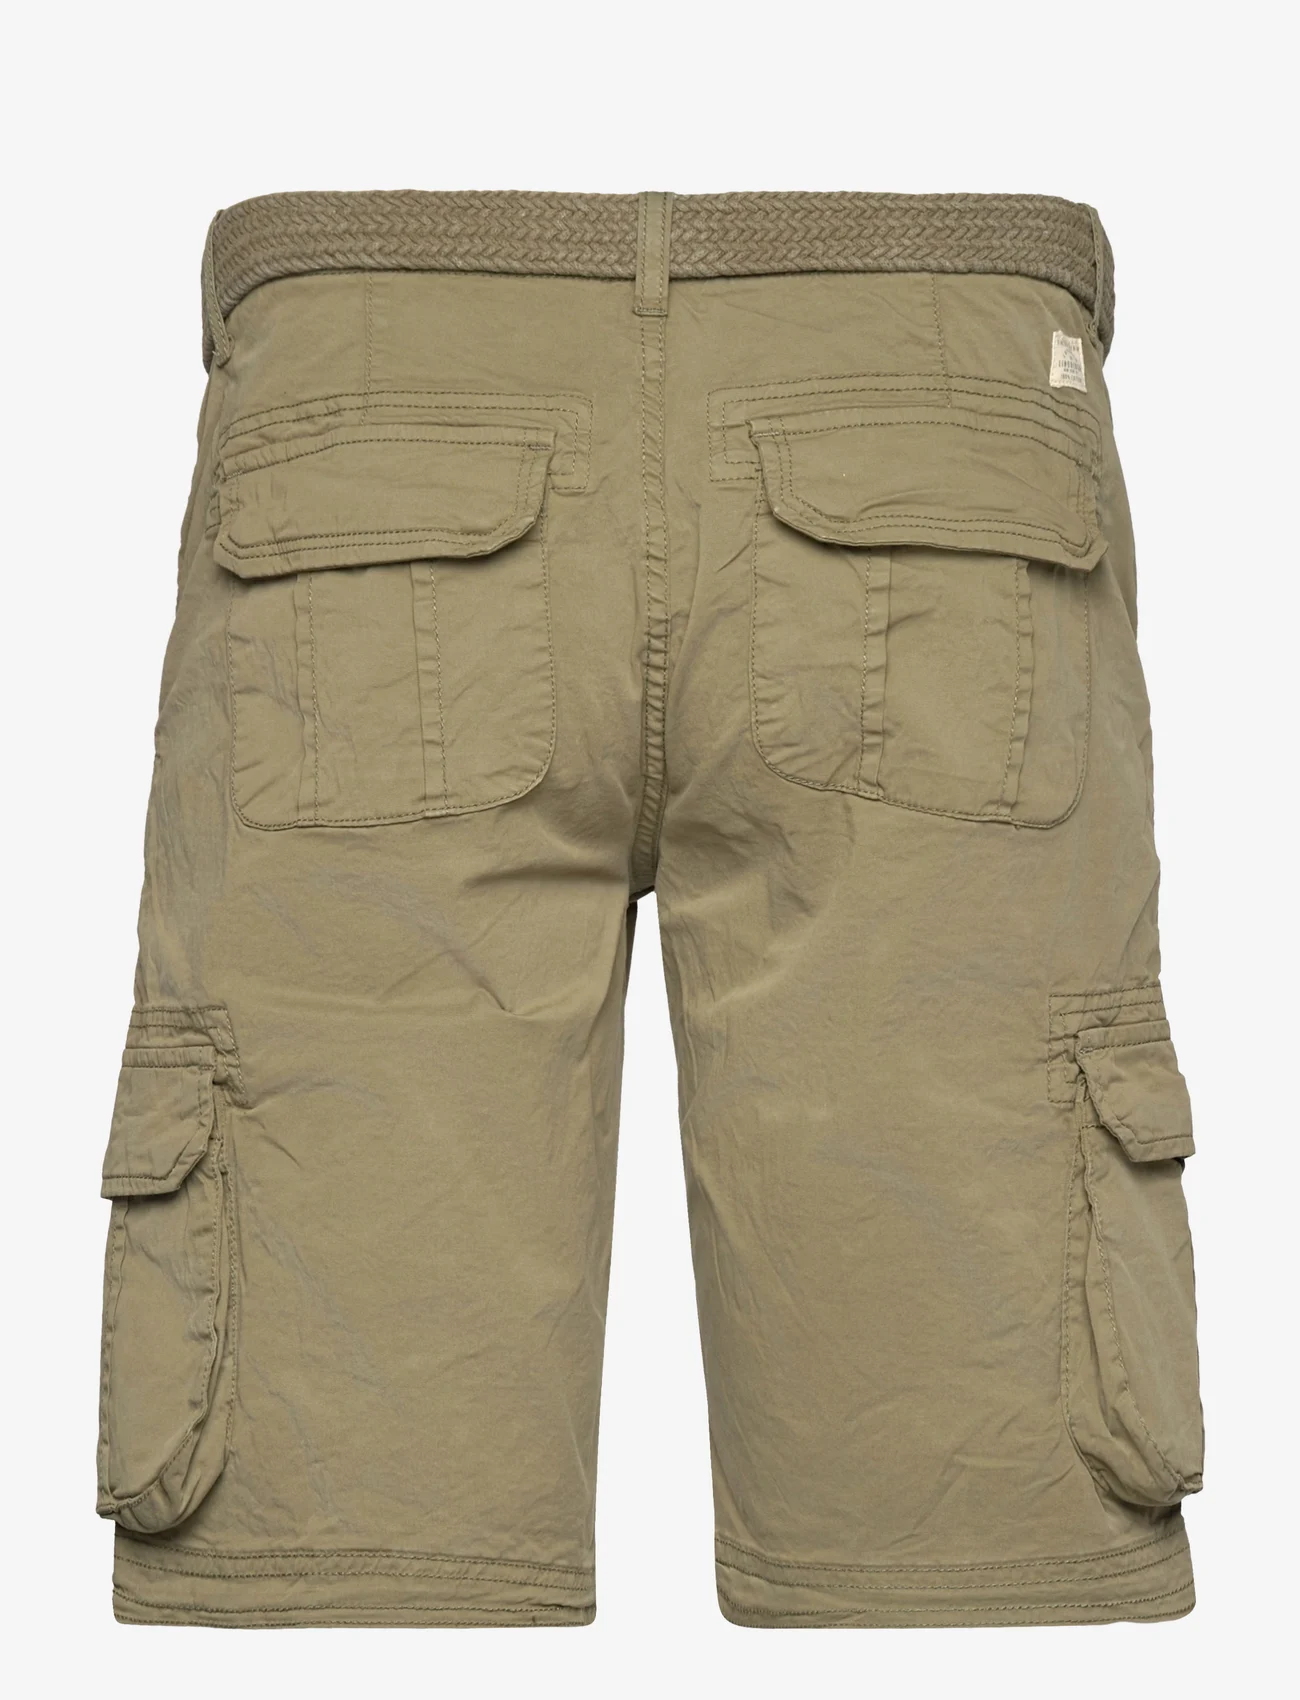 Lindbergh - Garment dyed cargo shorts - shorts - army - 1